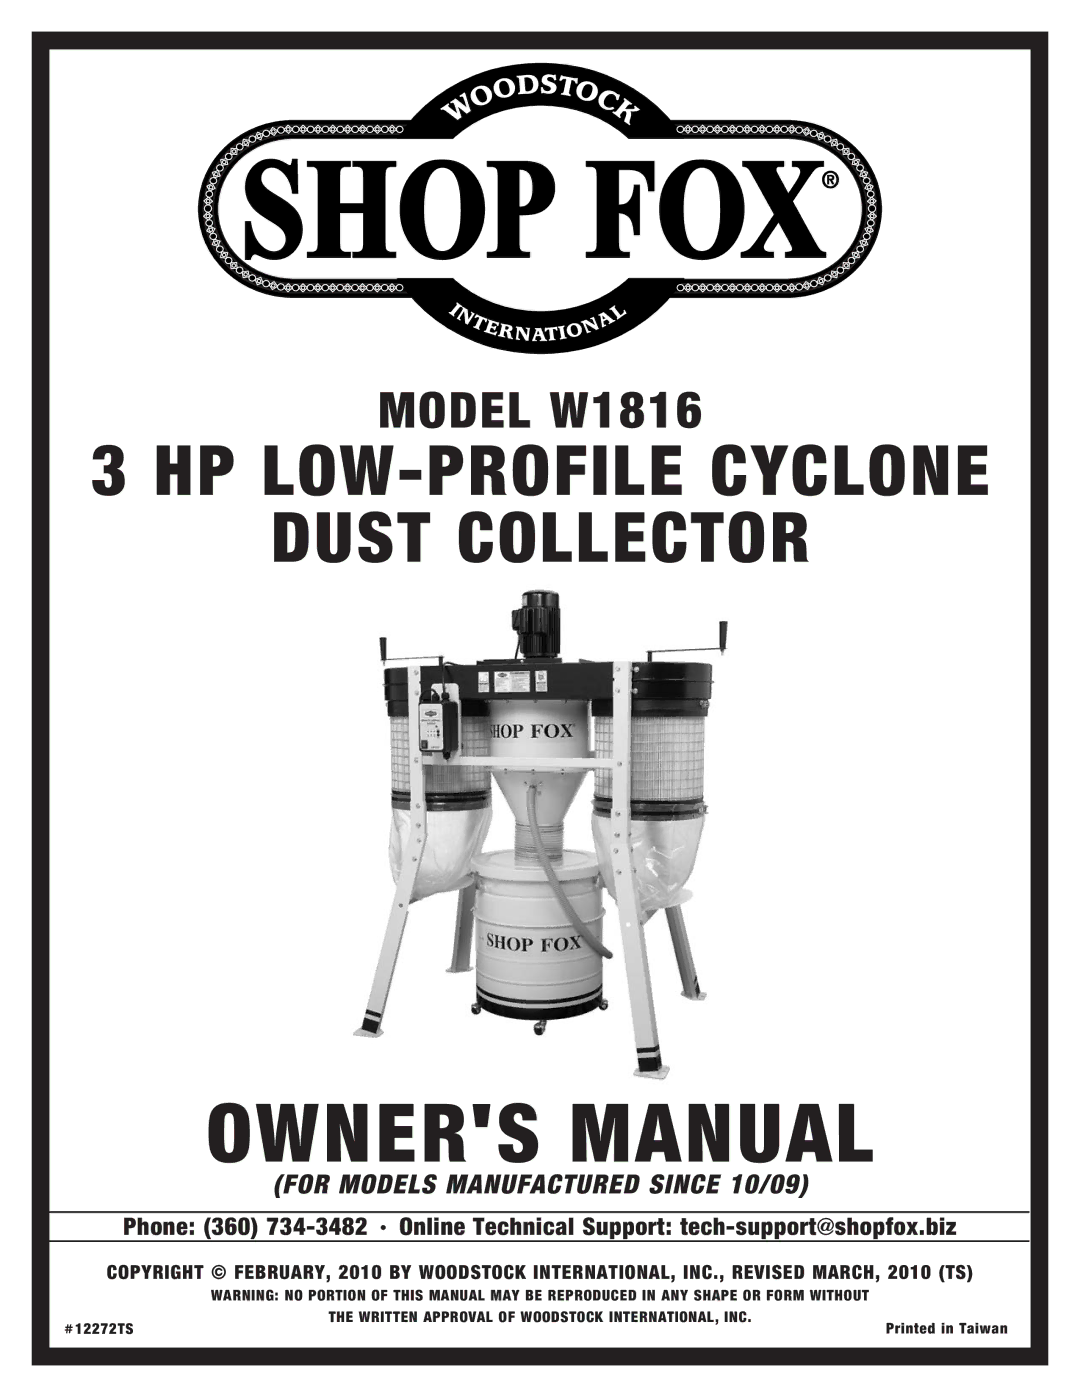 Woodstock owner manual Owners Manual, Model W1816 